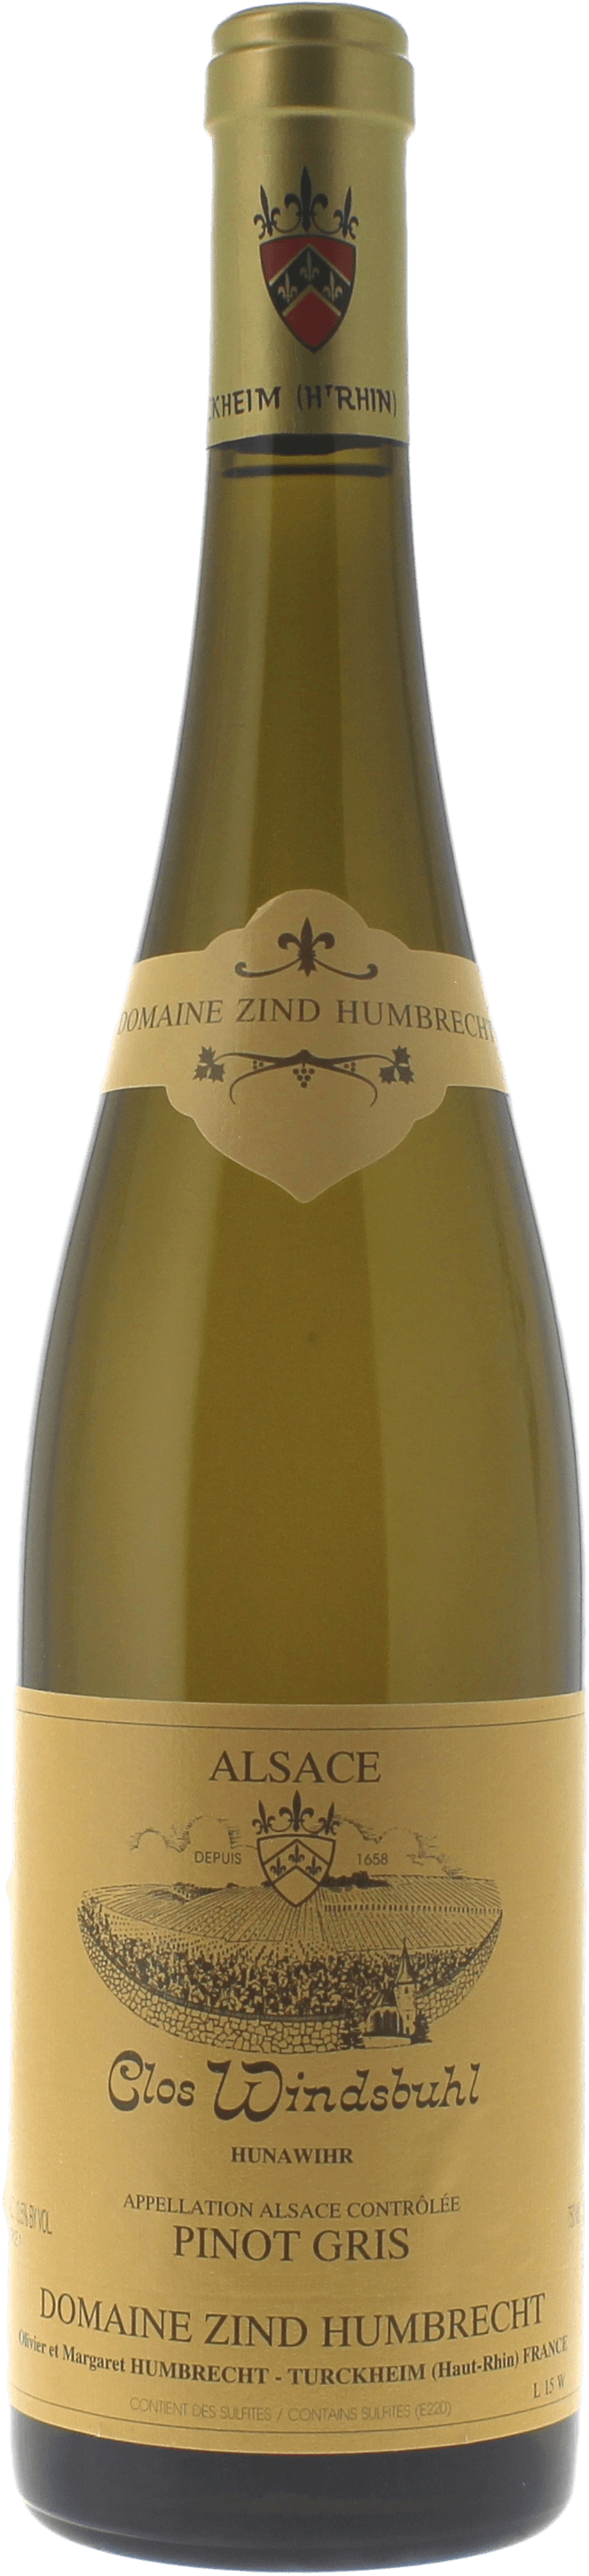 Pinot gris clos windsbuhl domaine zind humbrecht 2020  Zind Humbrecht, Alsace